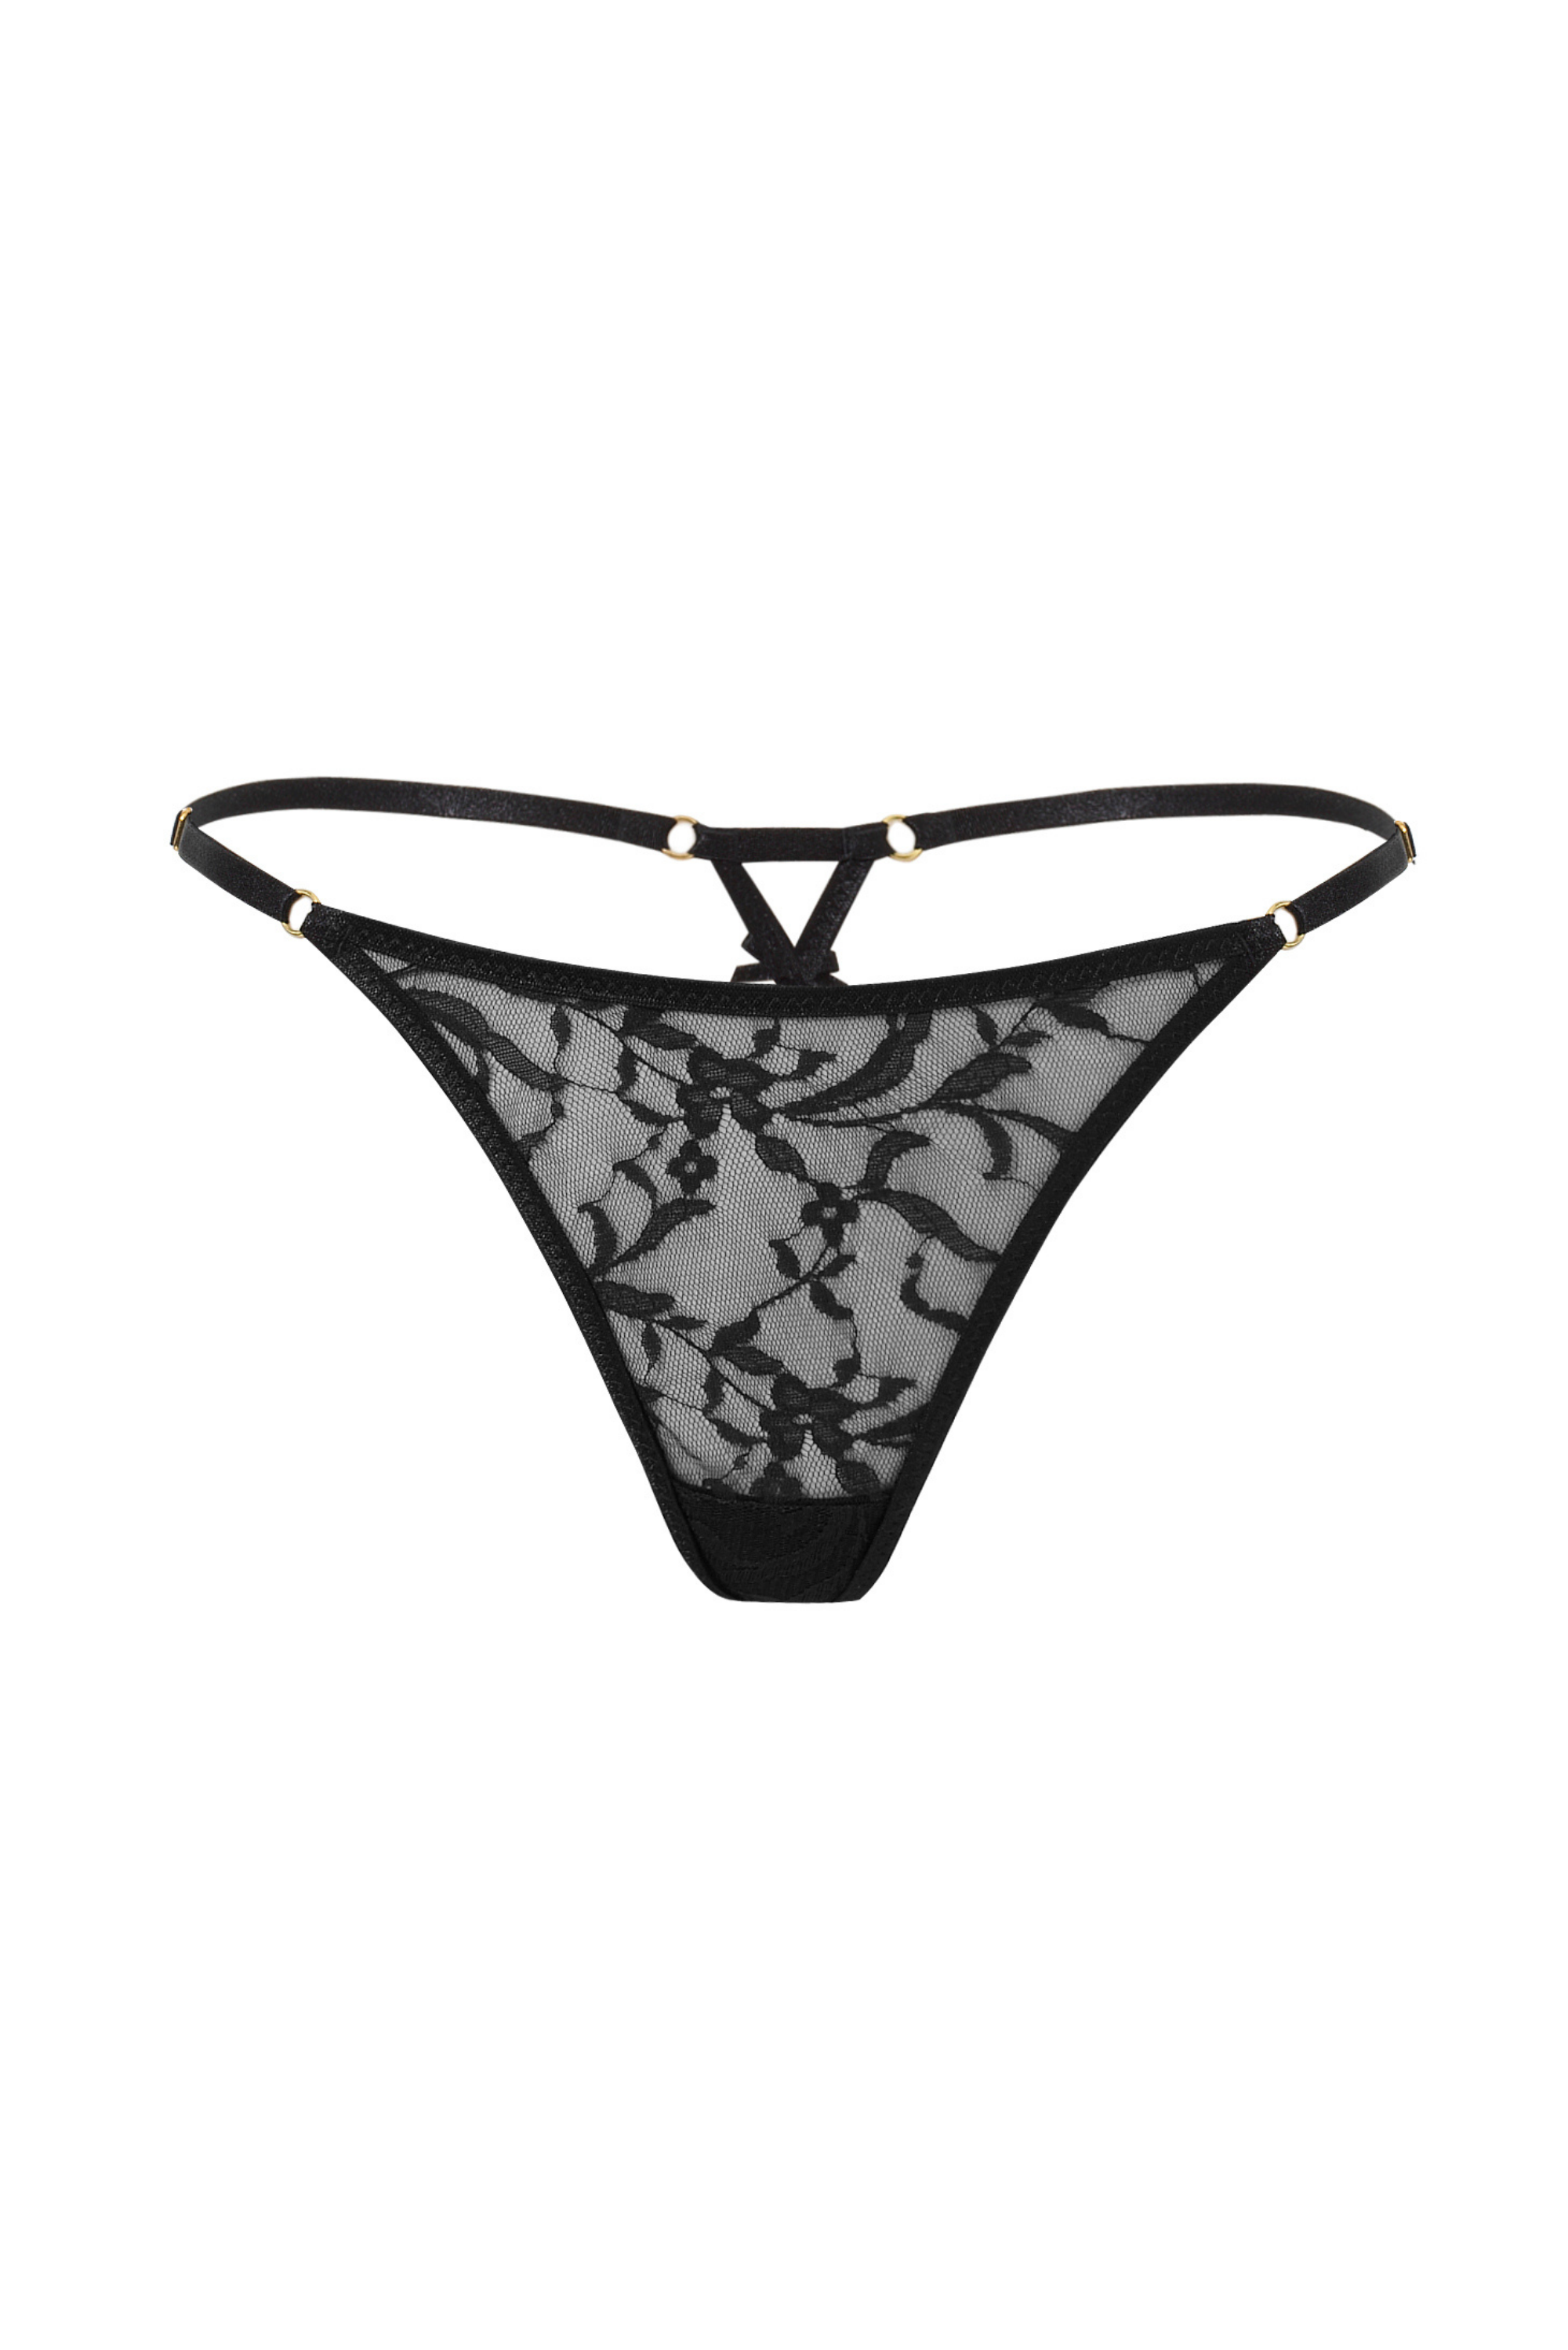 Thong Panties Lace Undergarment Lingerie PNG, Clipart, Bikini